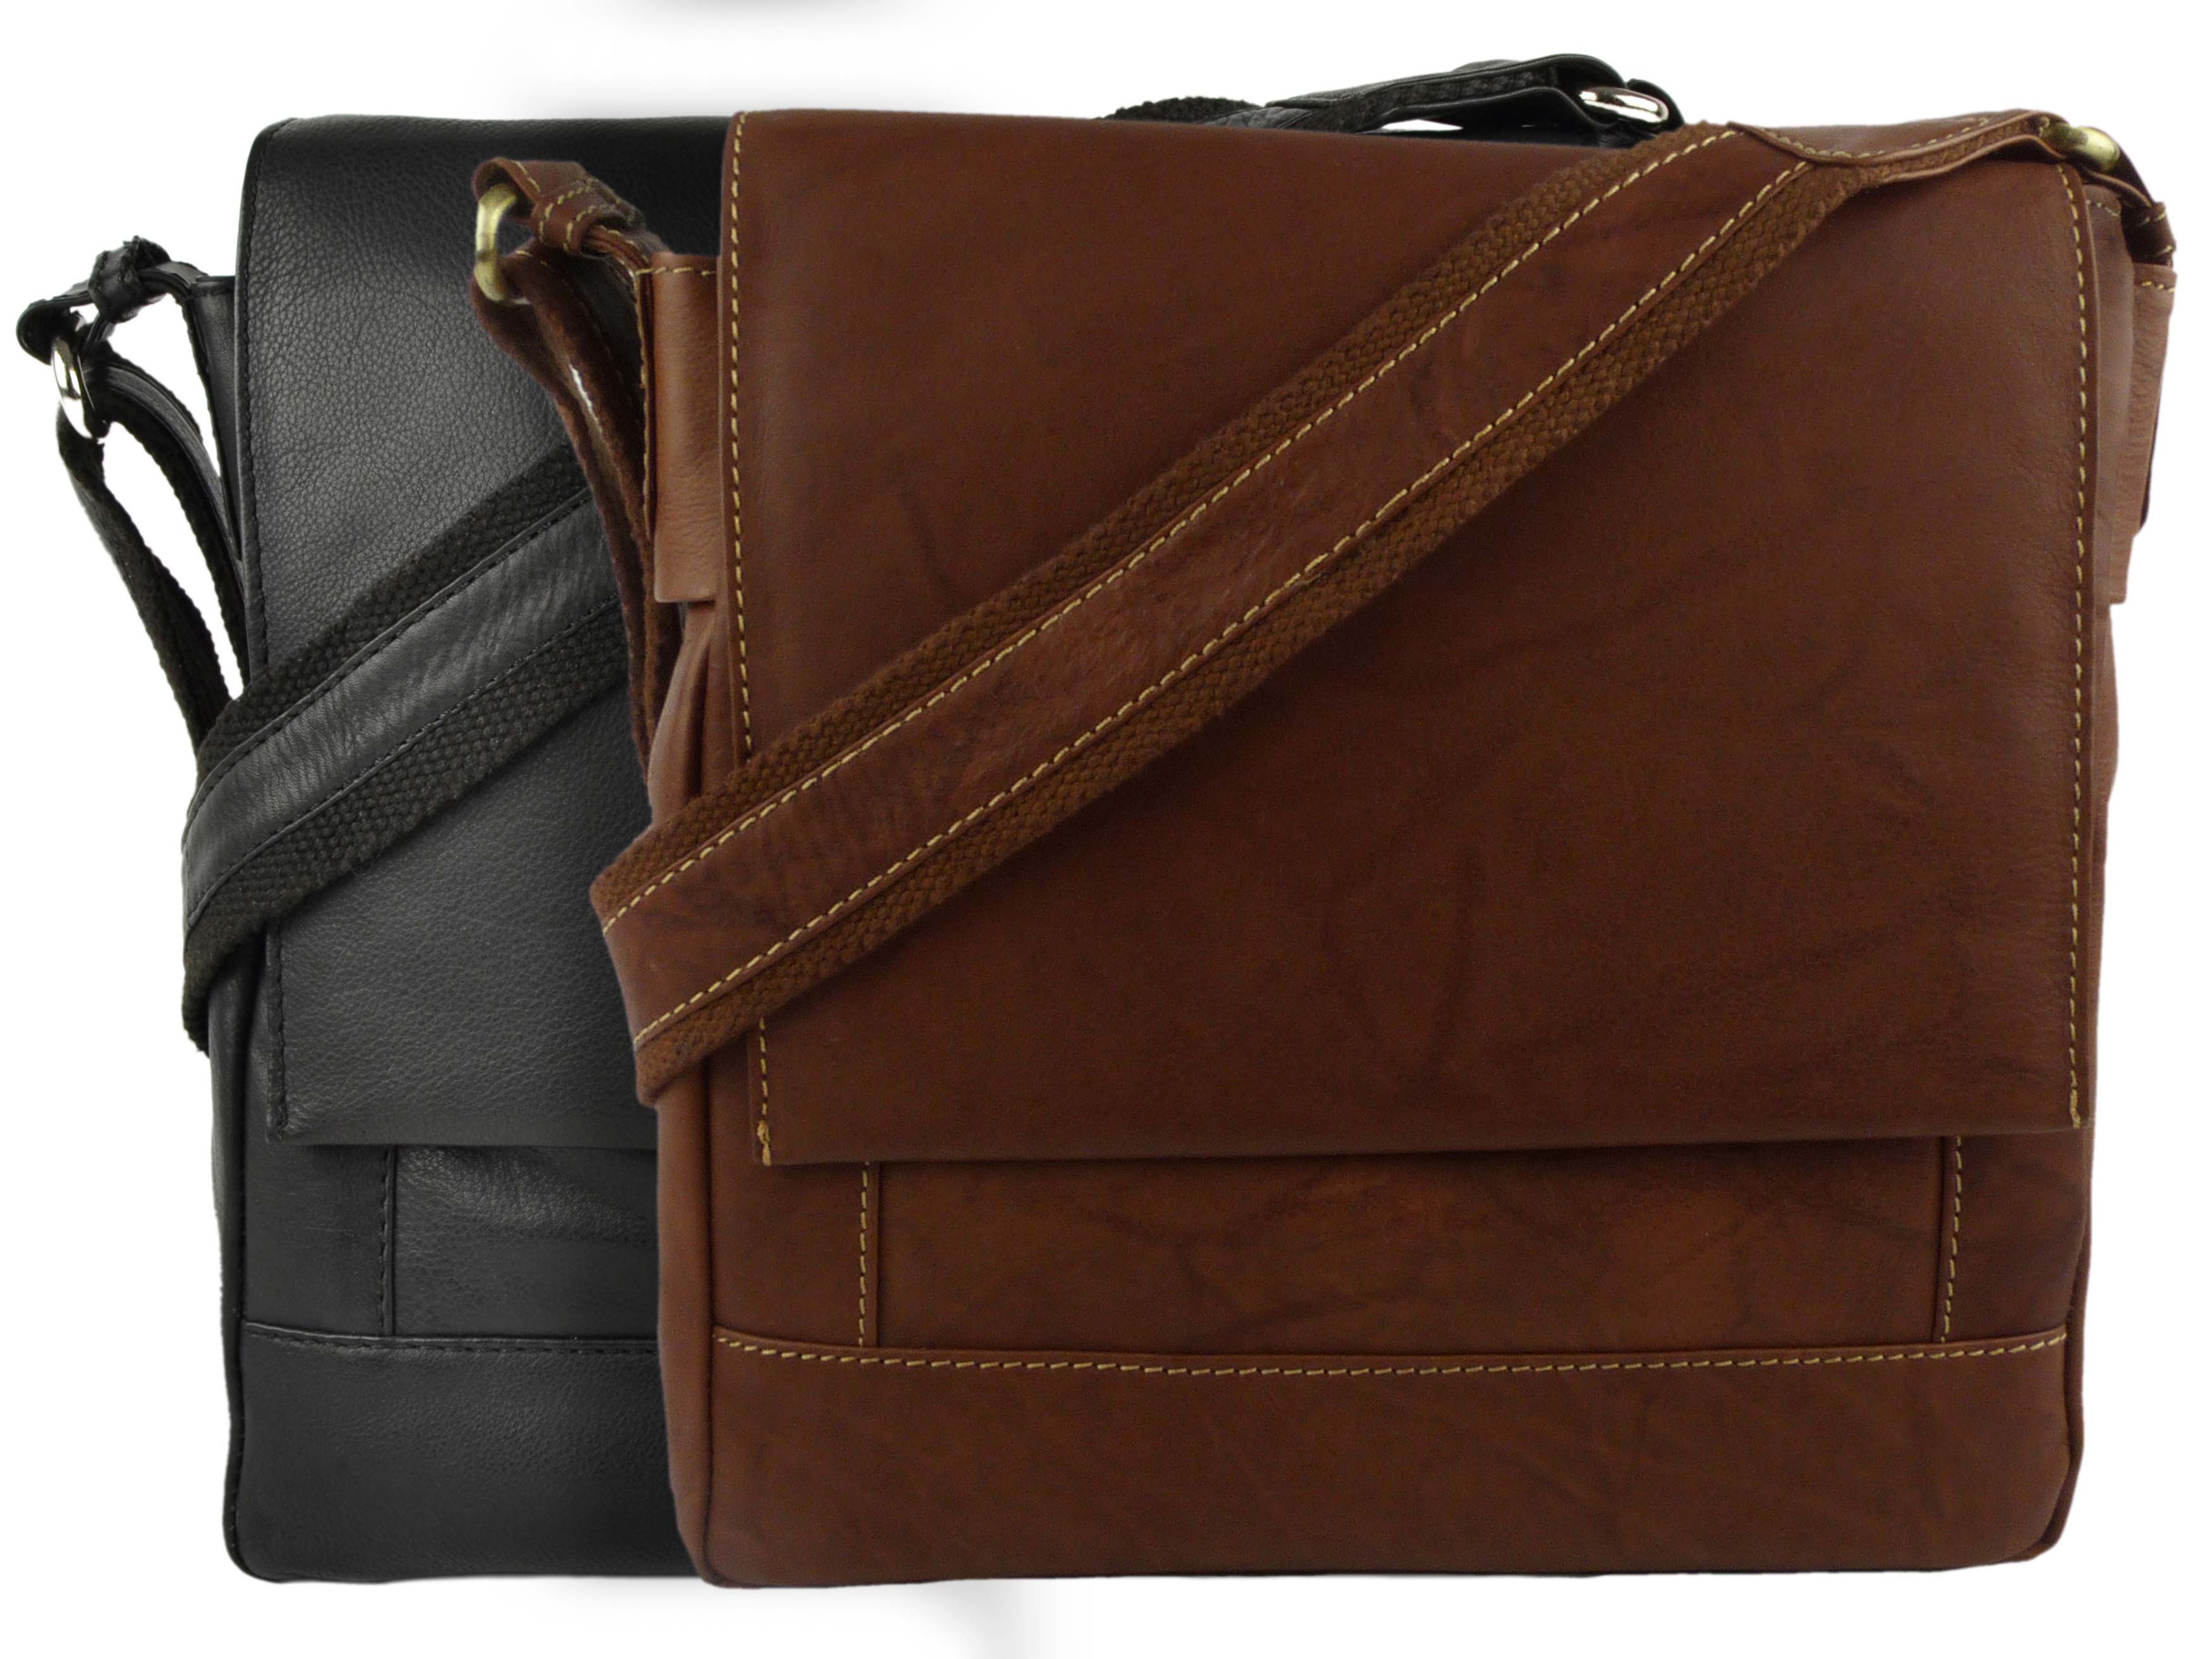 Mens Ladies Soft Leather Messenger Bag Cross Body by Nova Leather | eBay